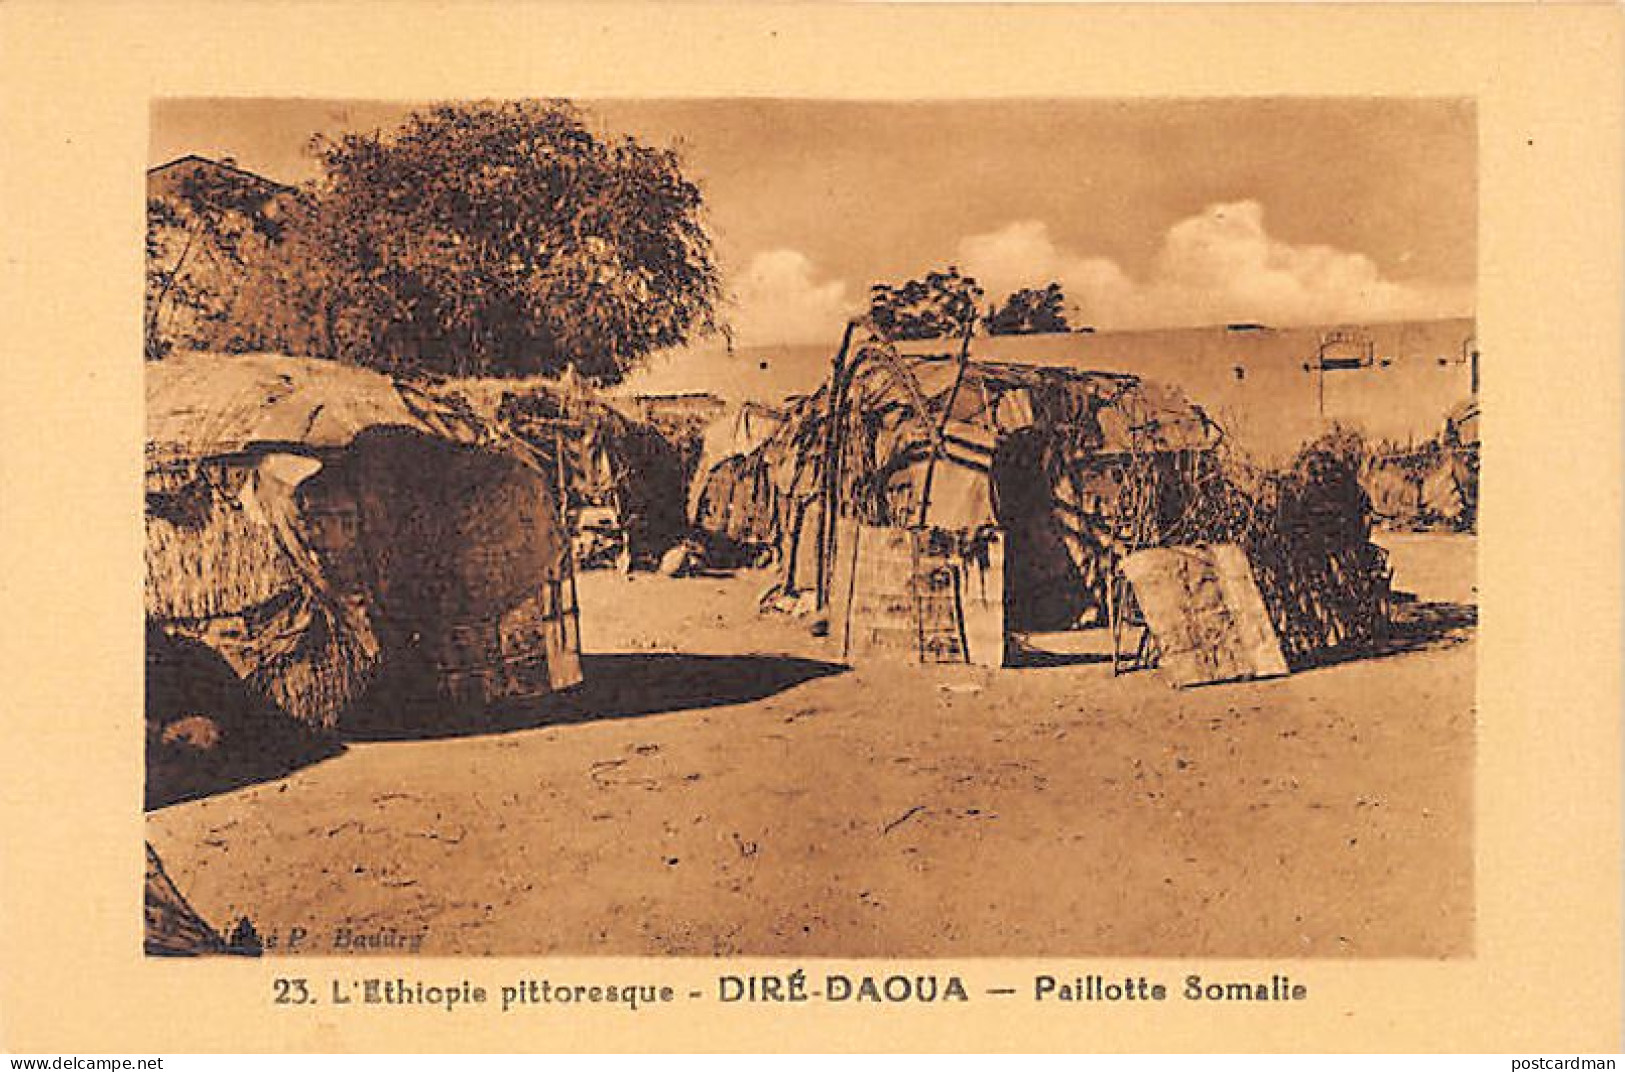 Ethiopia - DIRE DAWA - Somali Straw Hut - Publ. Printing Works Of The Dire Dawa Catholic Mission - Photographer P. Baudr - Äthiopien